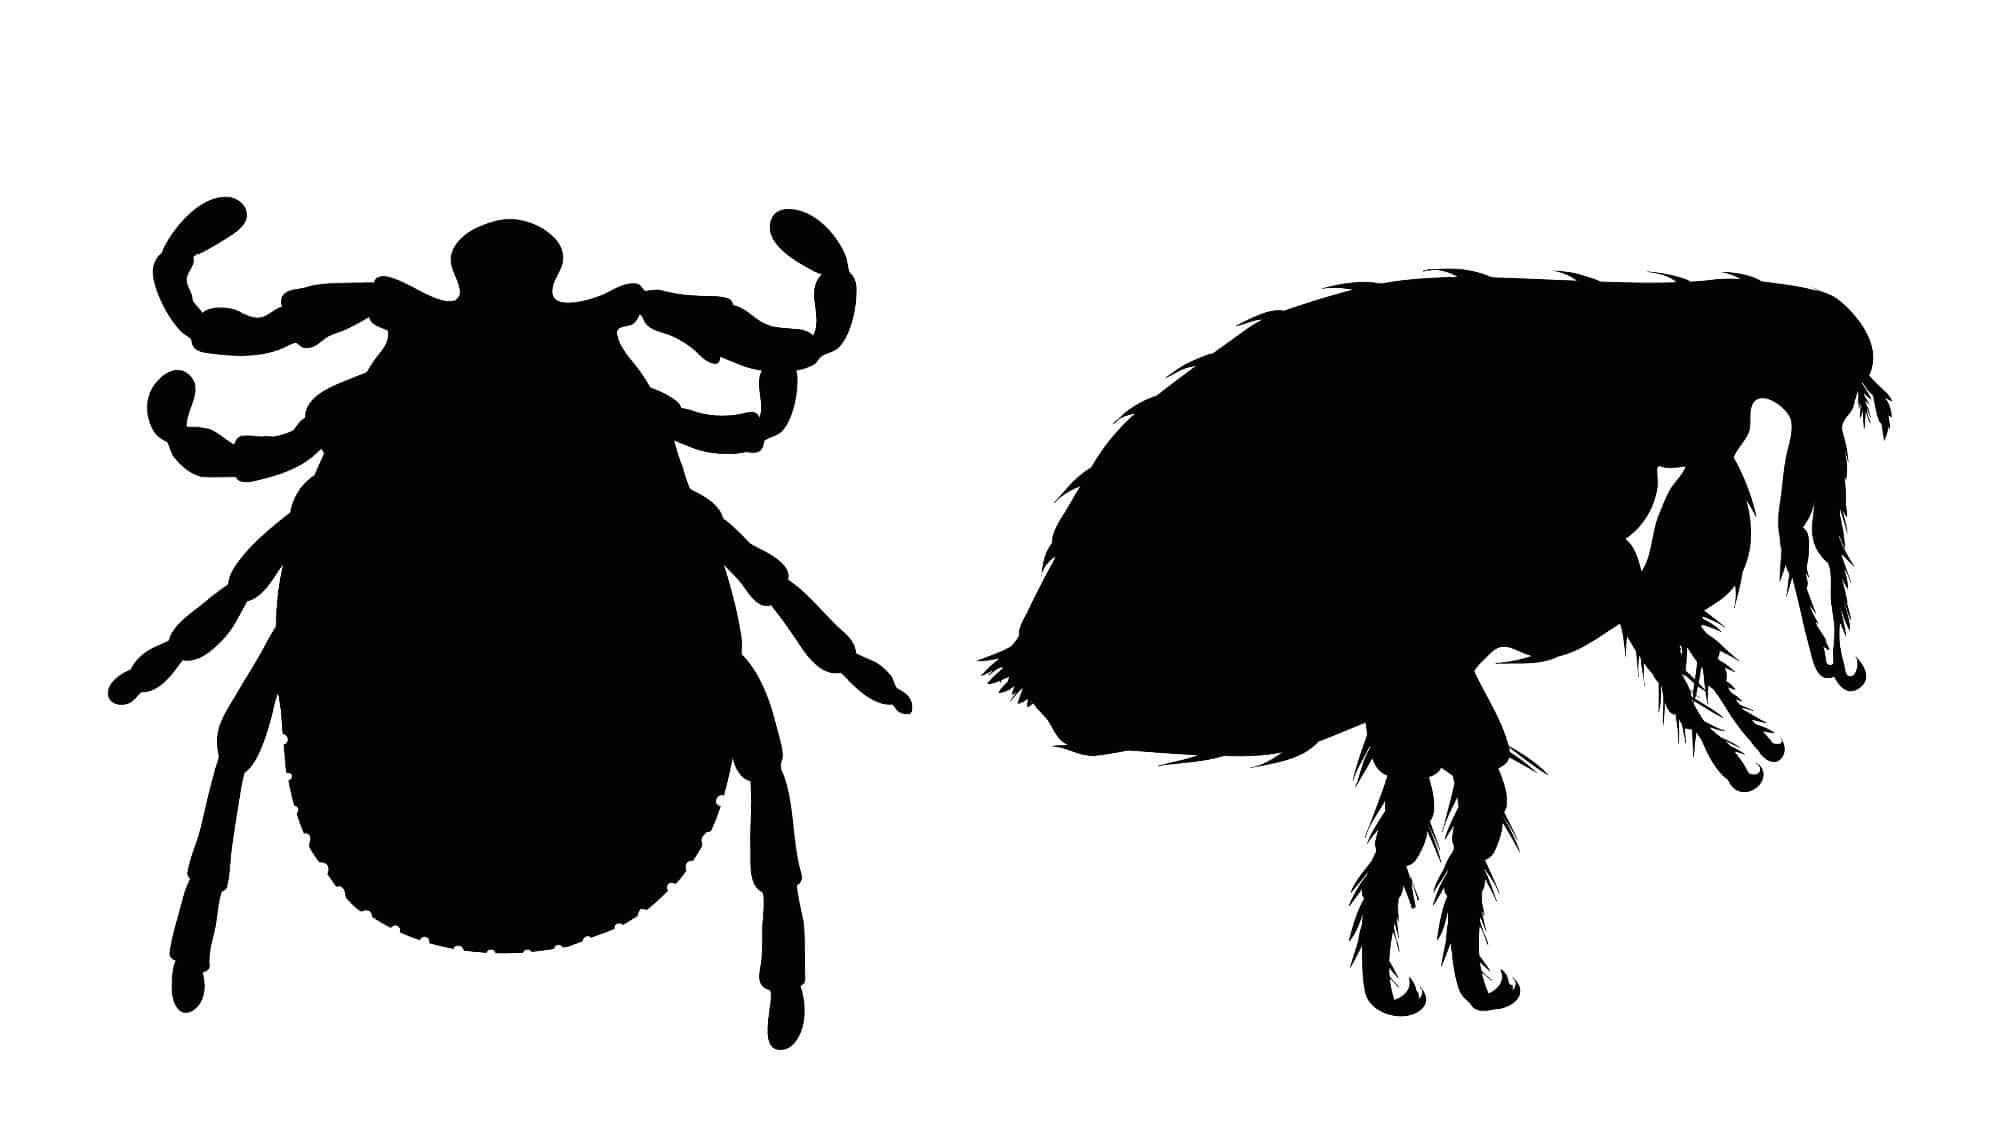 Outlines of a flea vs. tick